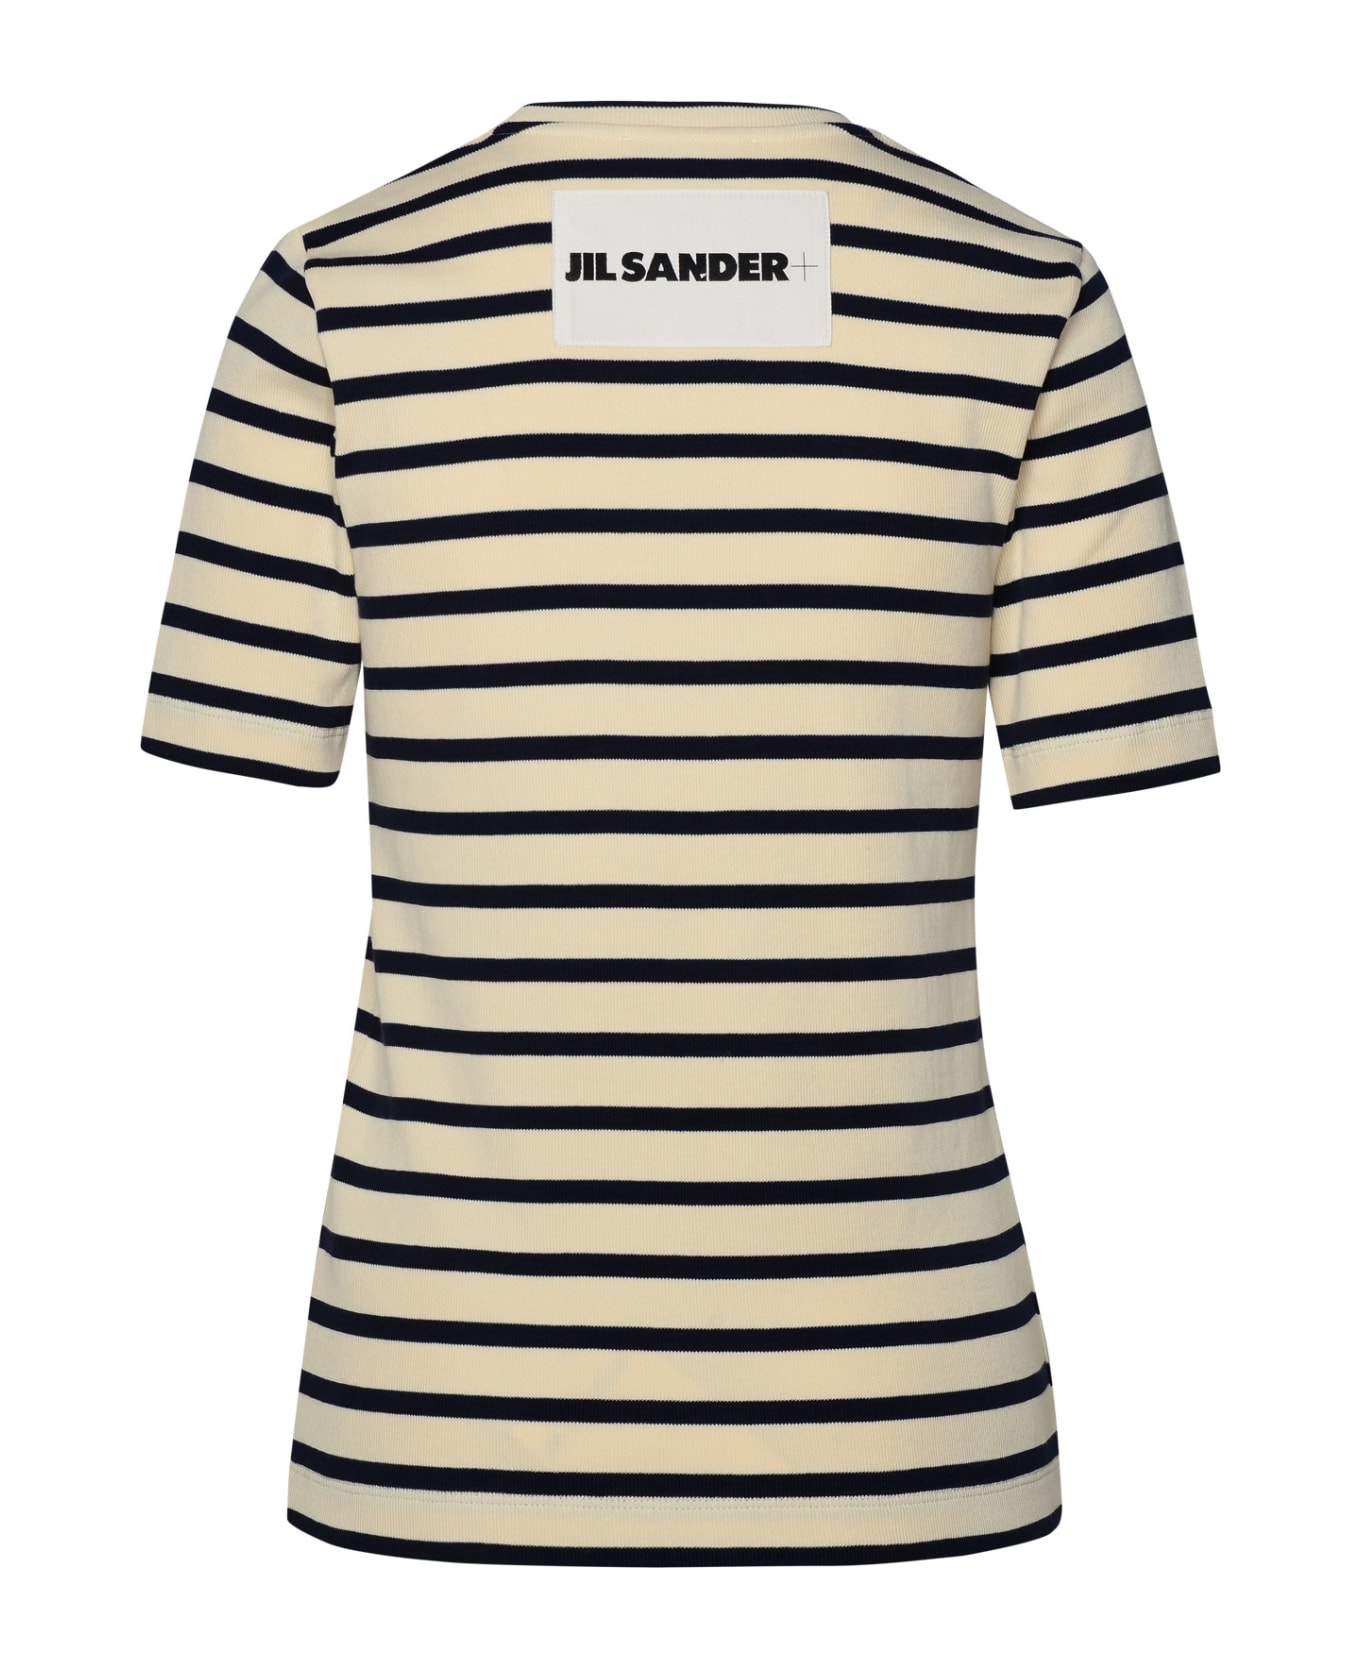 Jil Sander Two-tone Cotton T-shirt - Mariniere Tシャツ